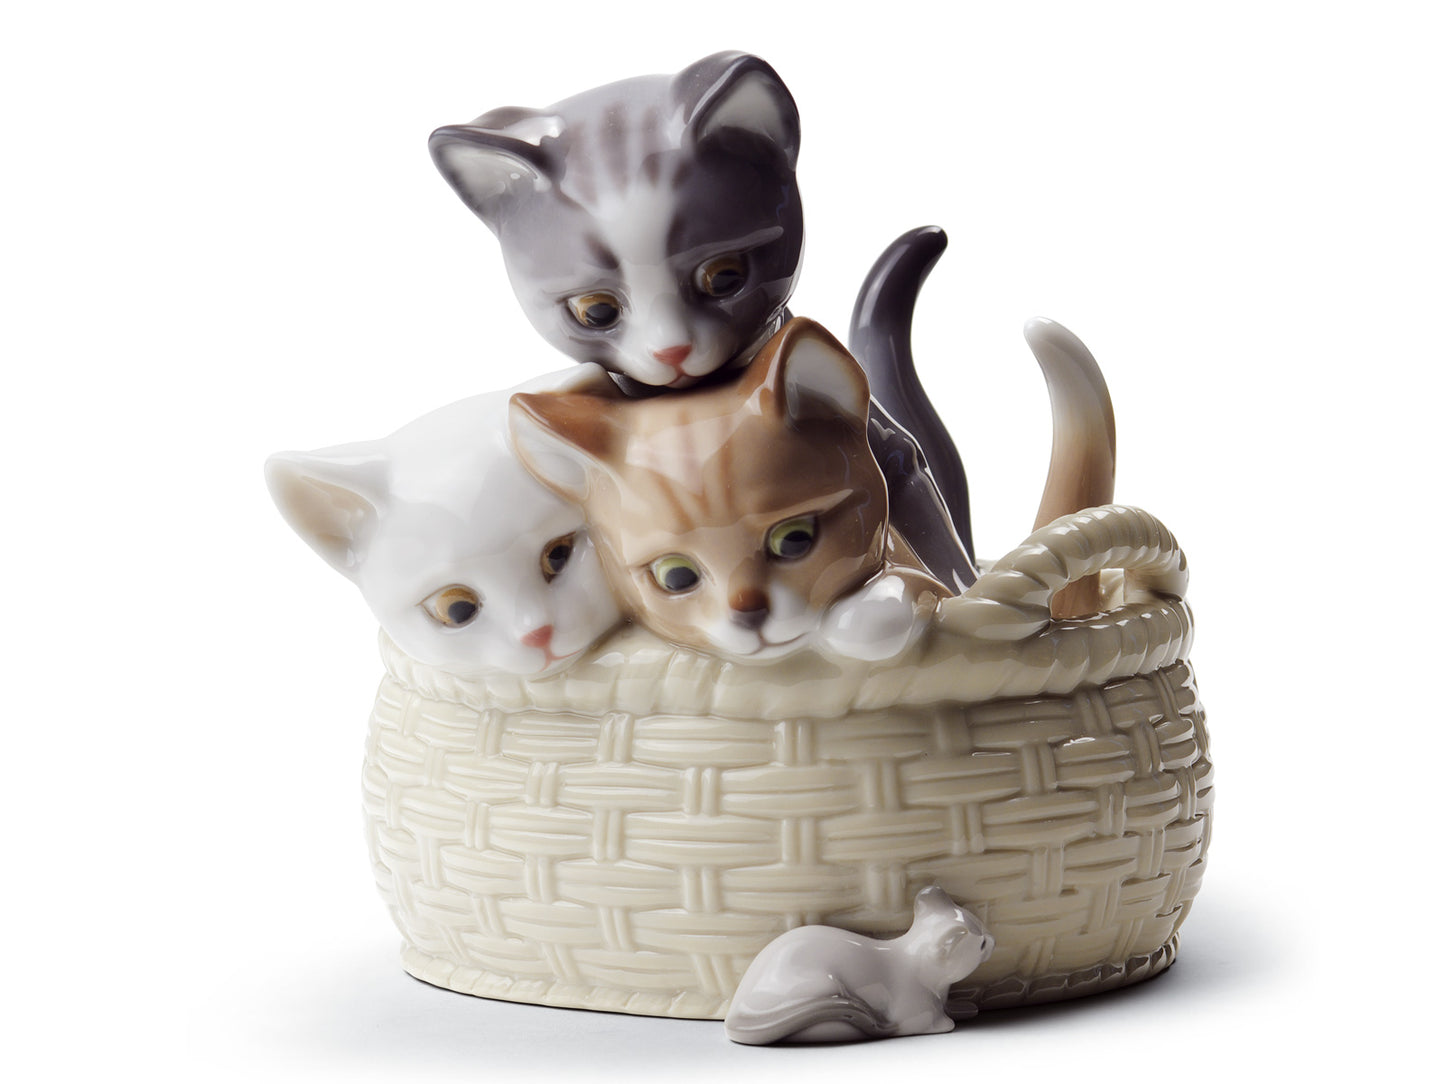 Lladro Curious Kittens